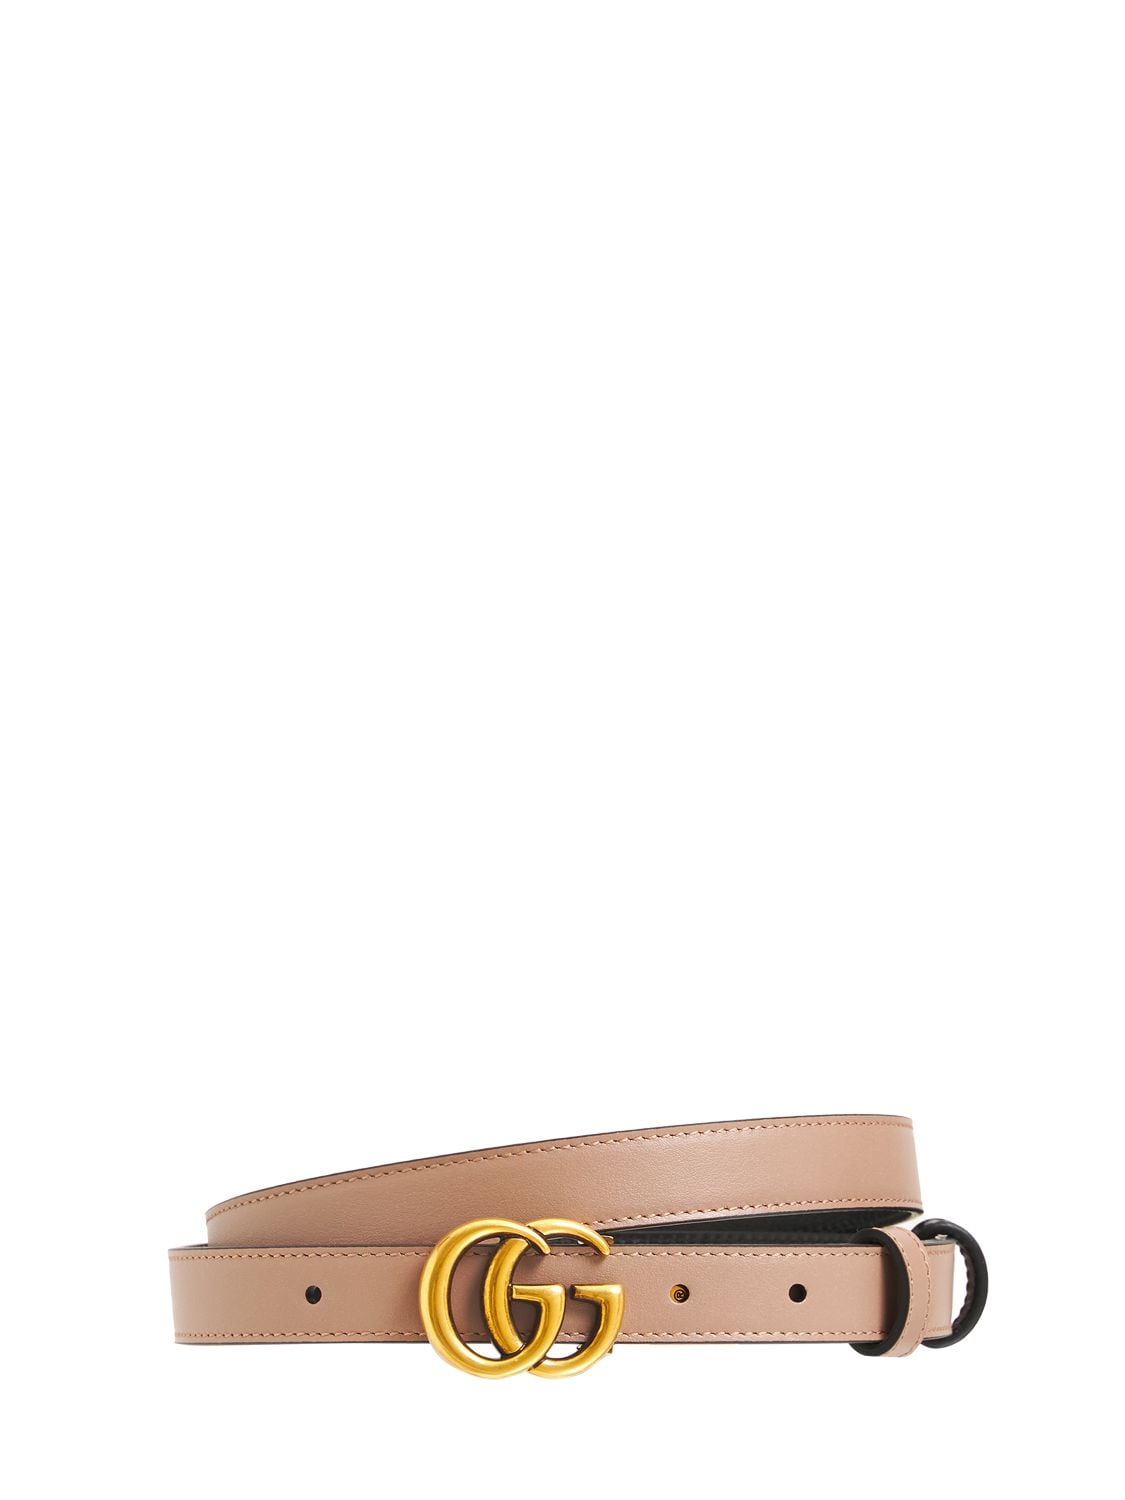 Gucci Reversible Belt | ModeSens